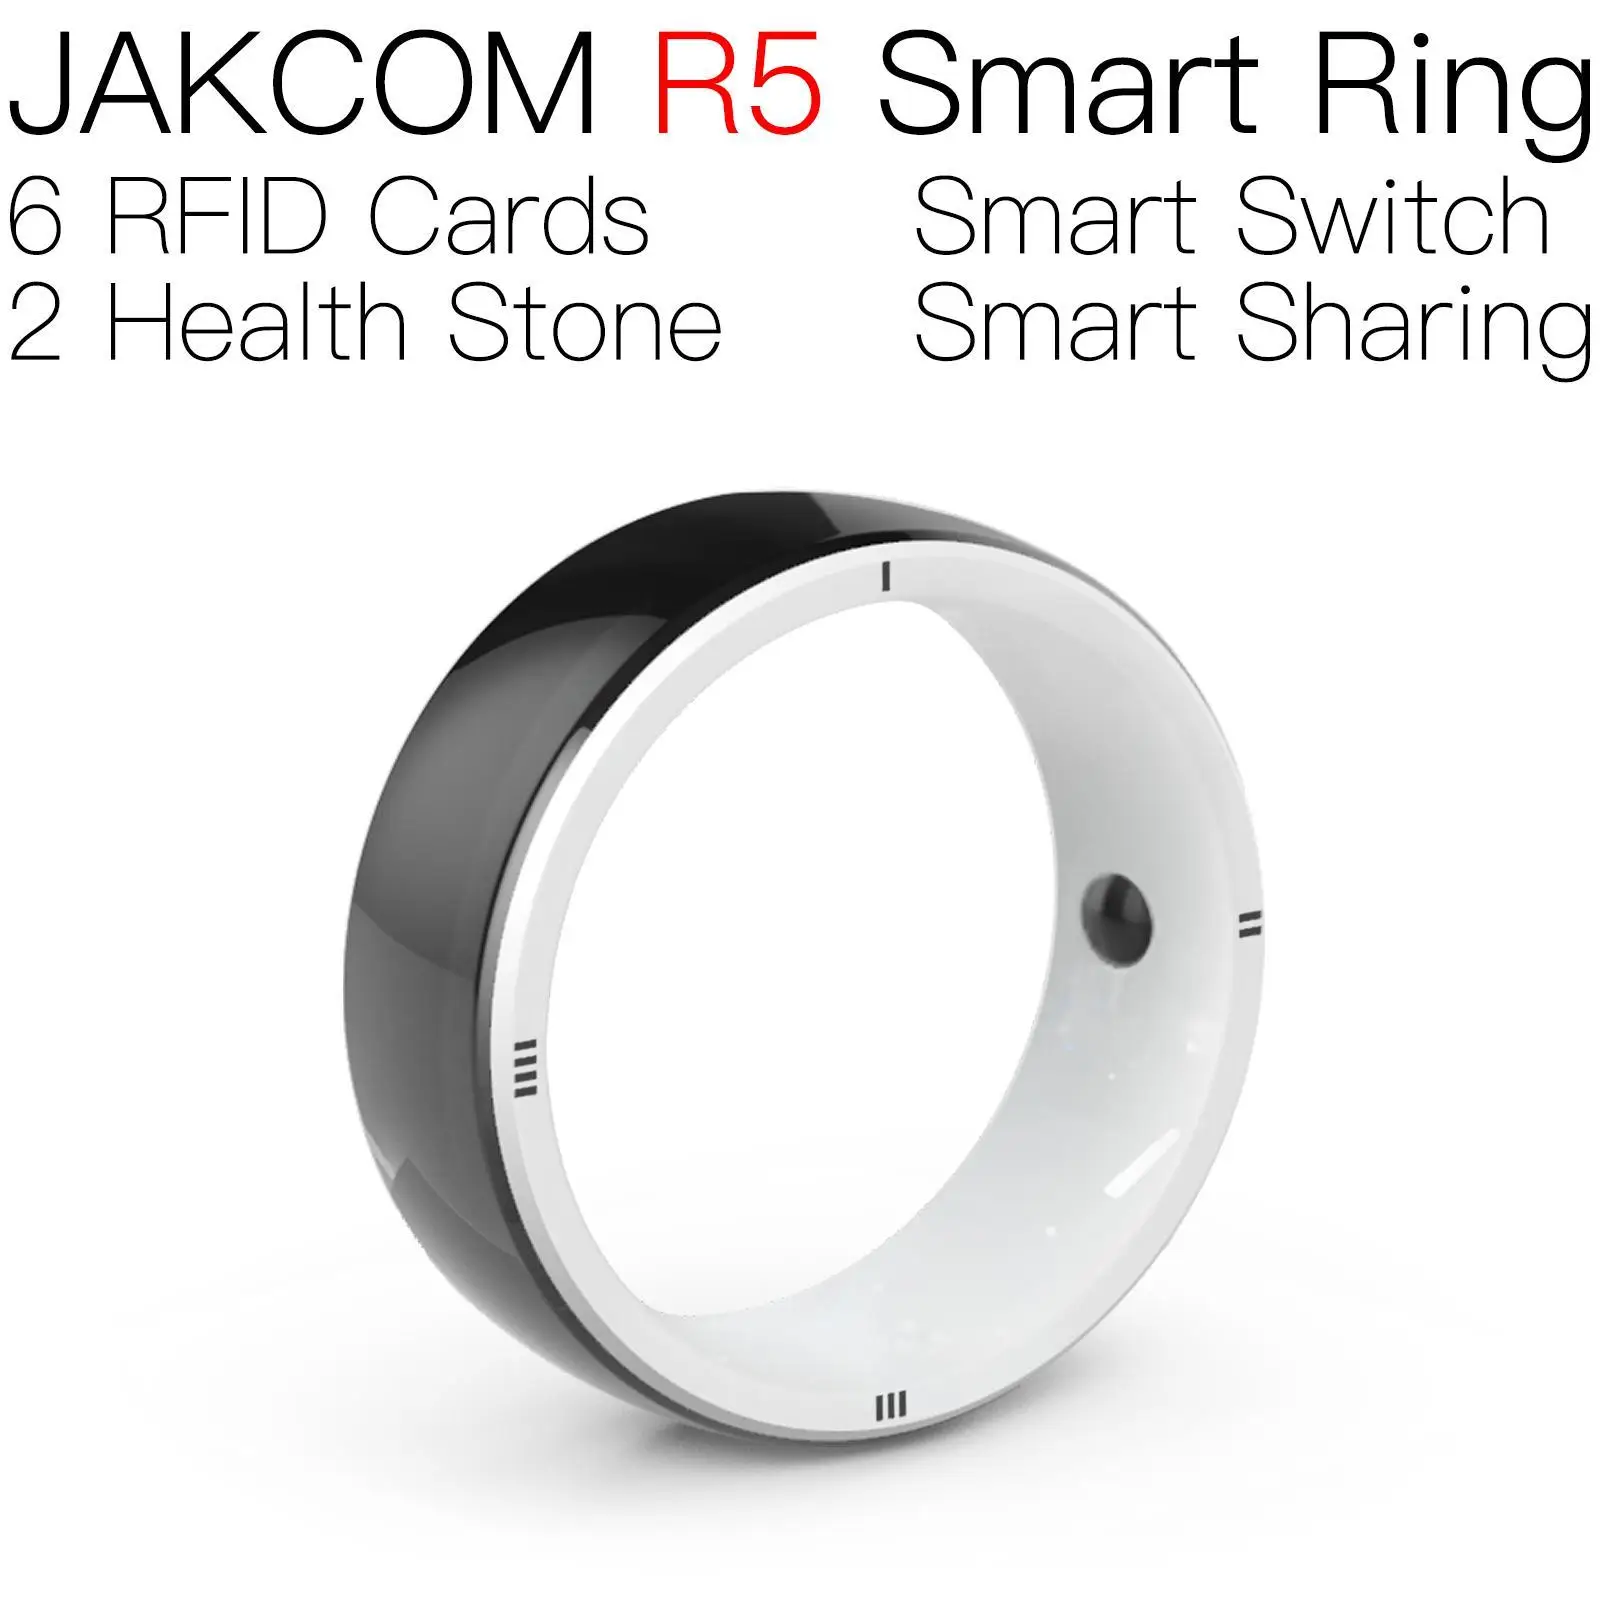 

JAKCOM R5 Smart Ring For men women rfid sticker card sms internet tag pet qr code hd 6970 chip ati 2gb 26bit uhf lr reader